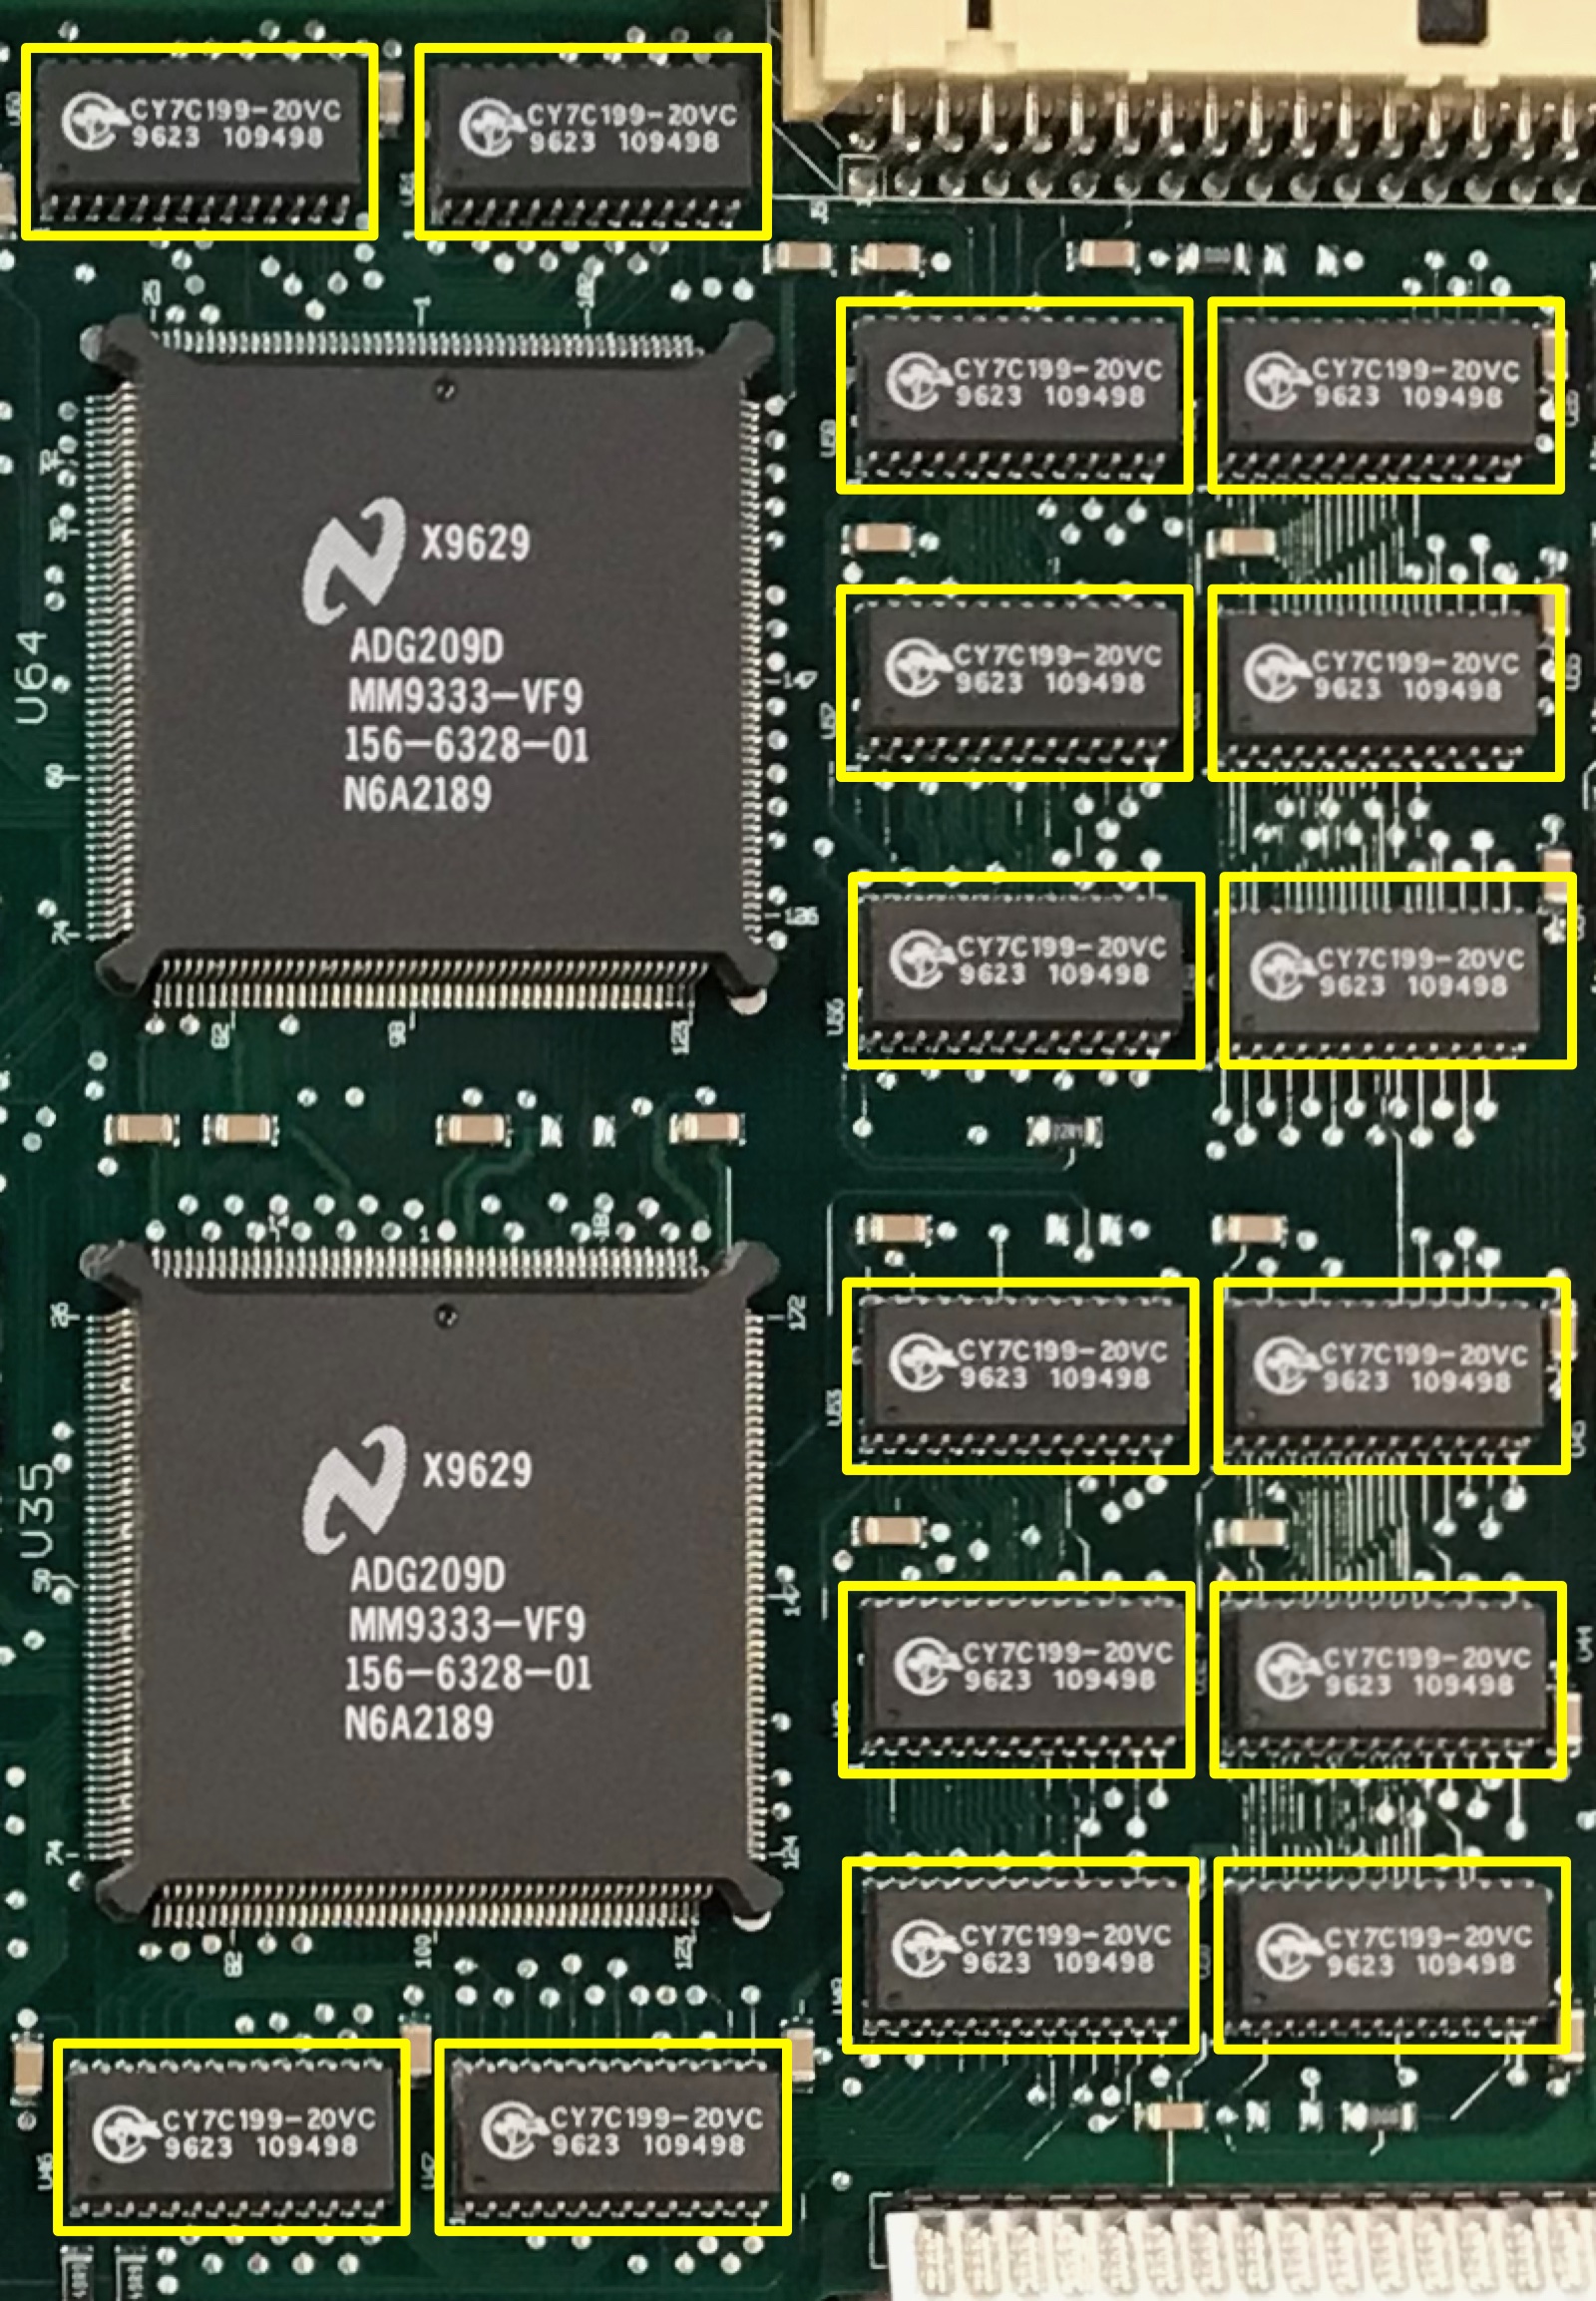 Sample Memory Chips